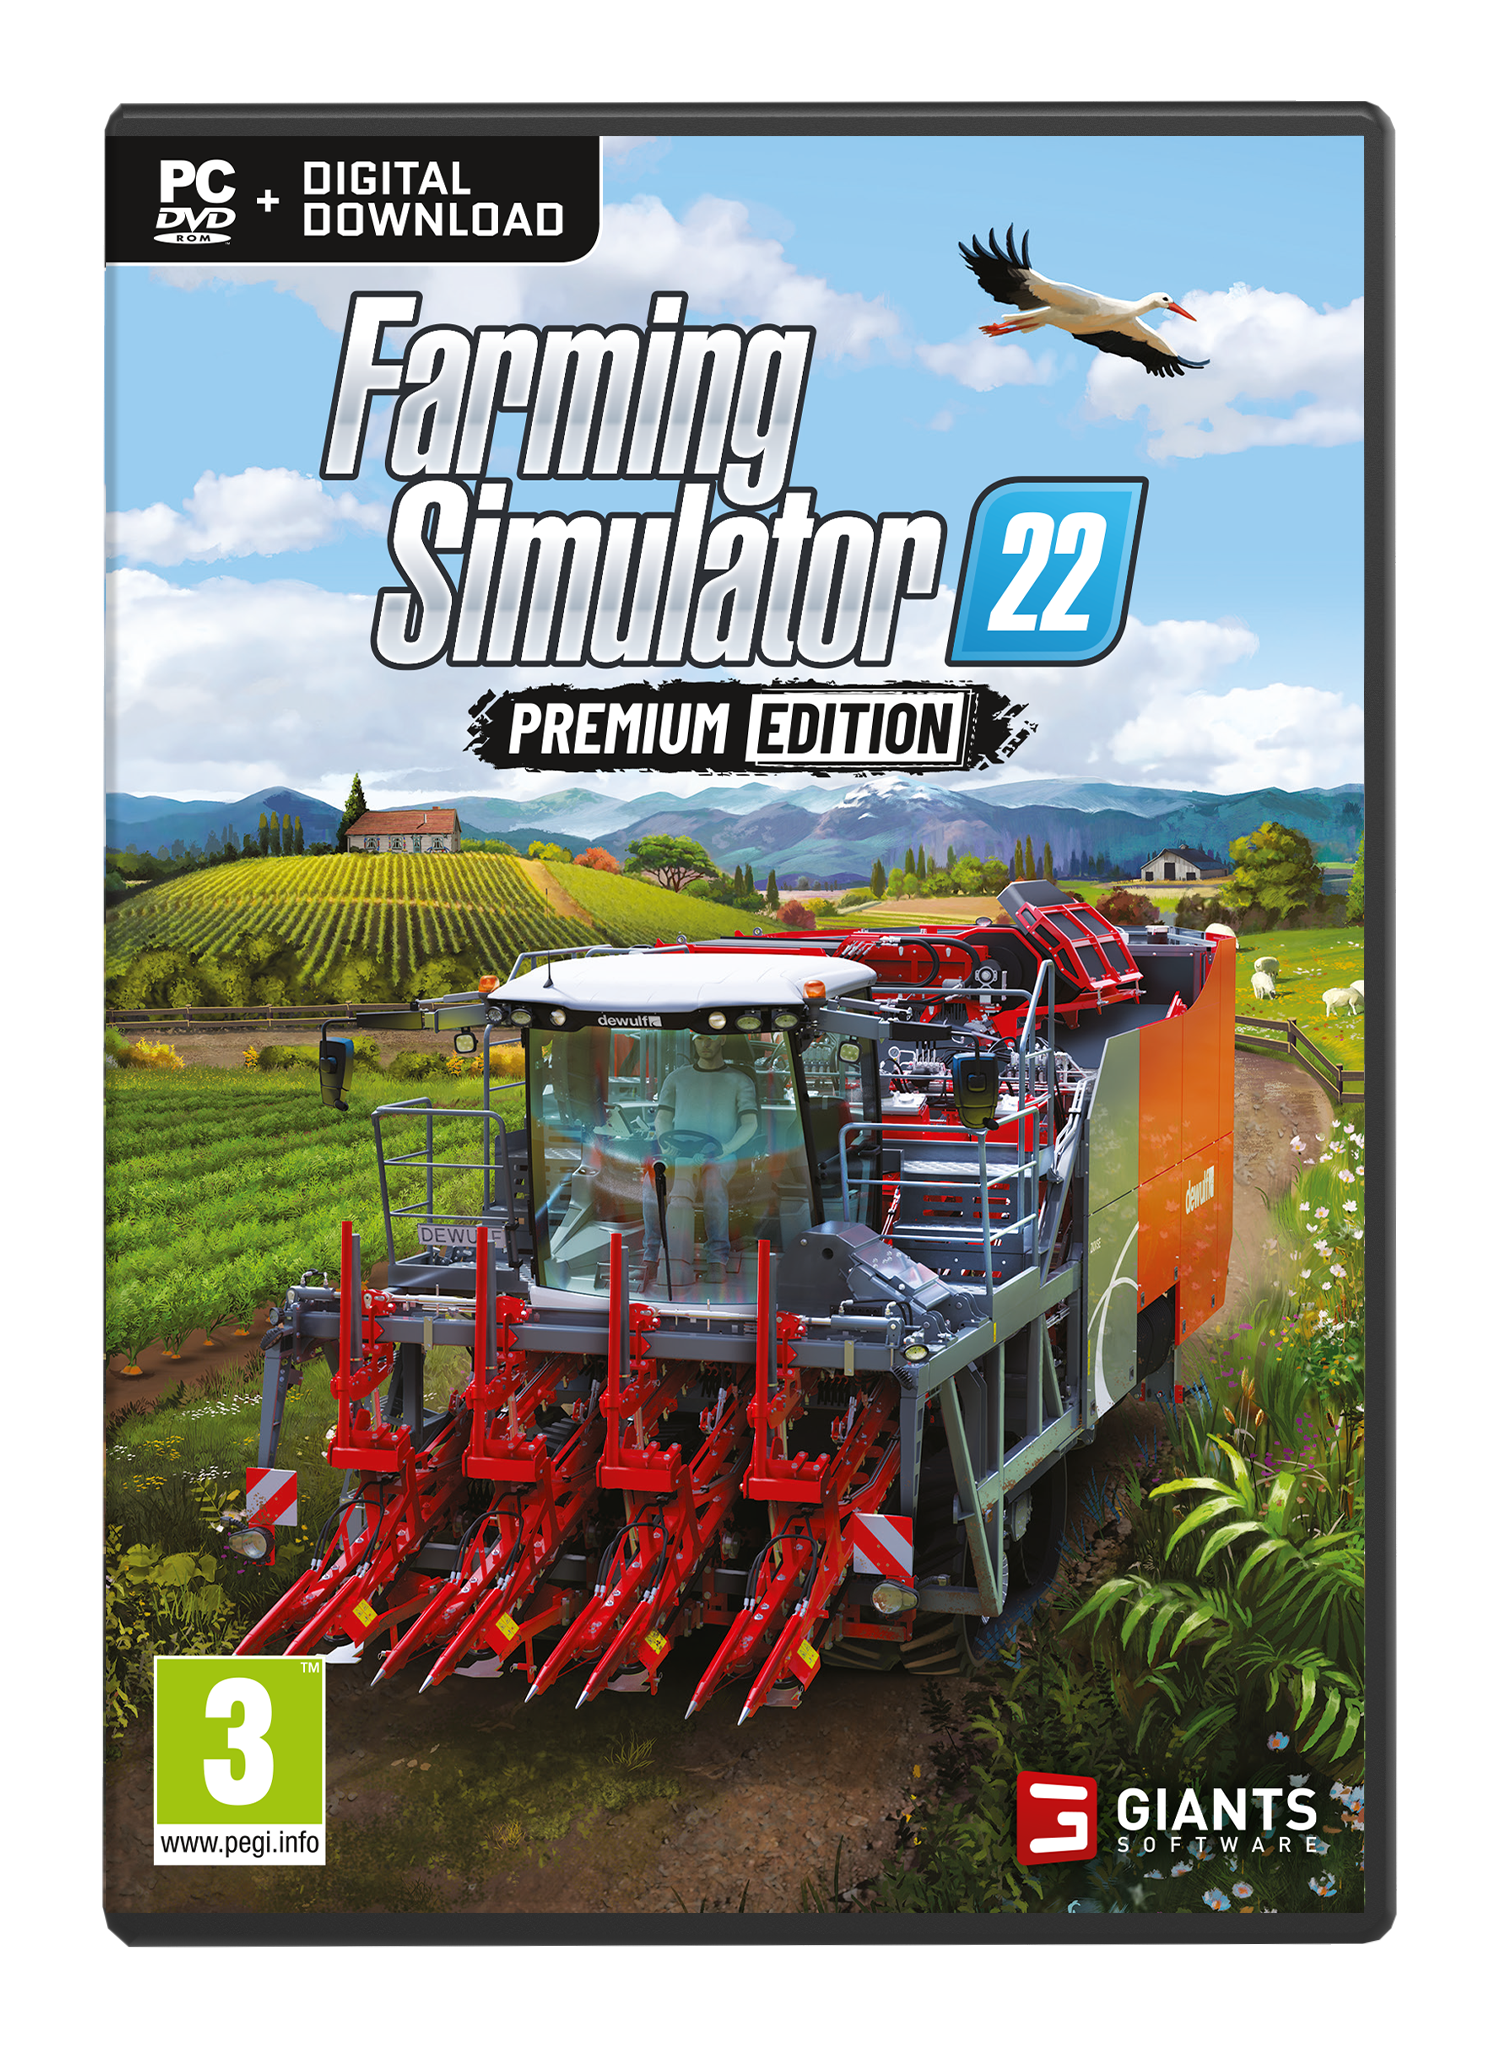 https://scale.coolshop-cdn.com/product-media.coolshop-cdn.com/23G9Q6/ad7683e-2e394acb8010da50f9648642.png/f/farming-simulator-22-premium-edition.png